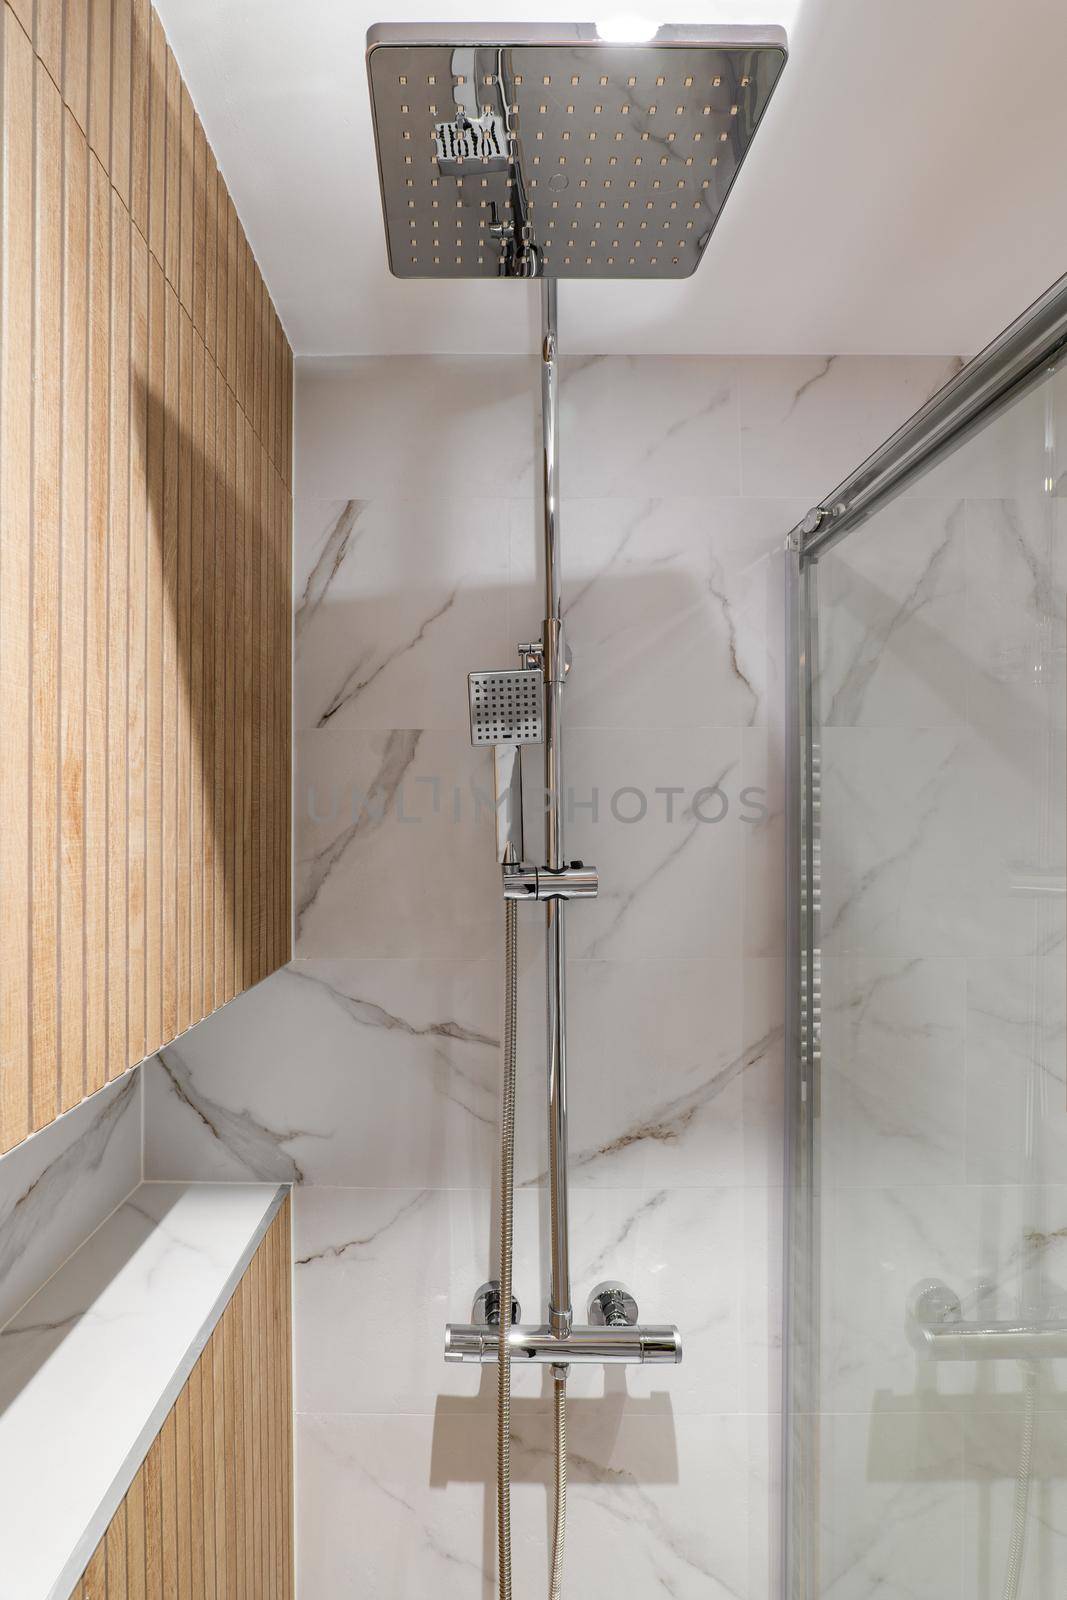 Big shower head and wooden finishing in interior of modern refurbished bathroom. by apavlin